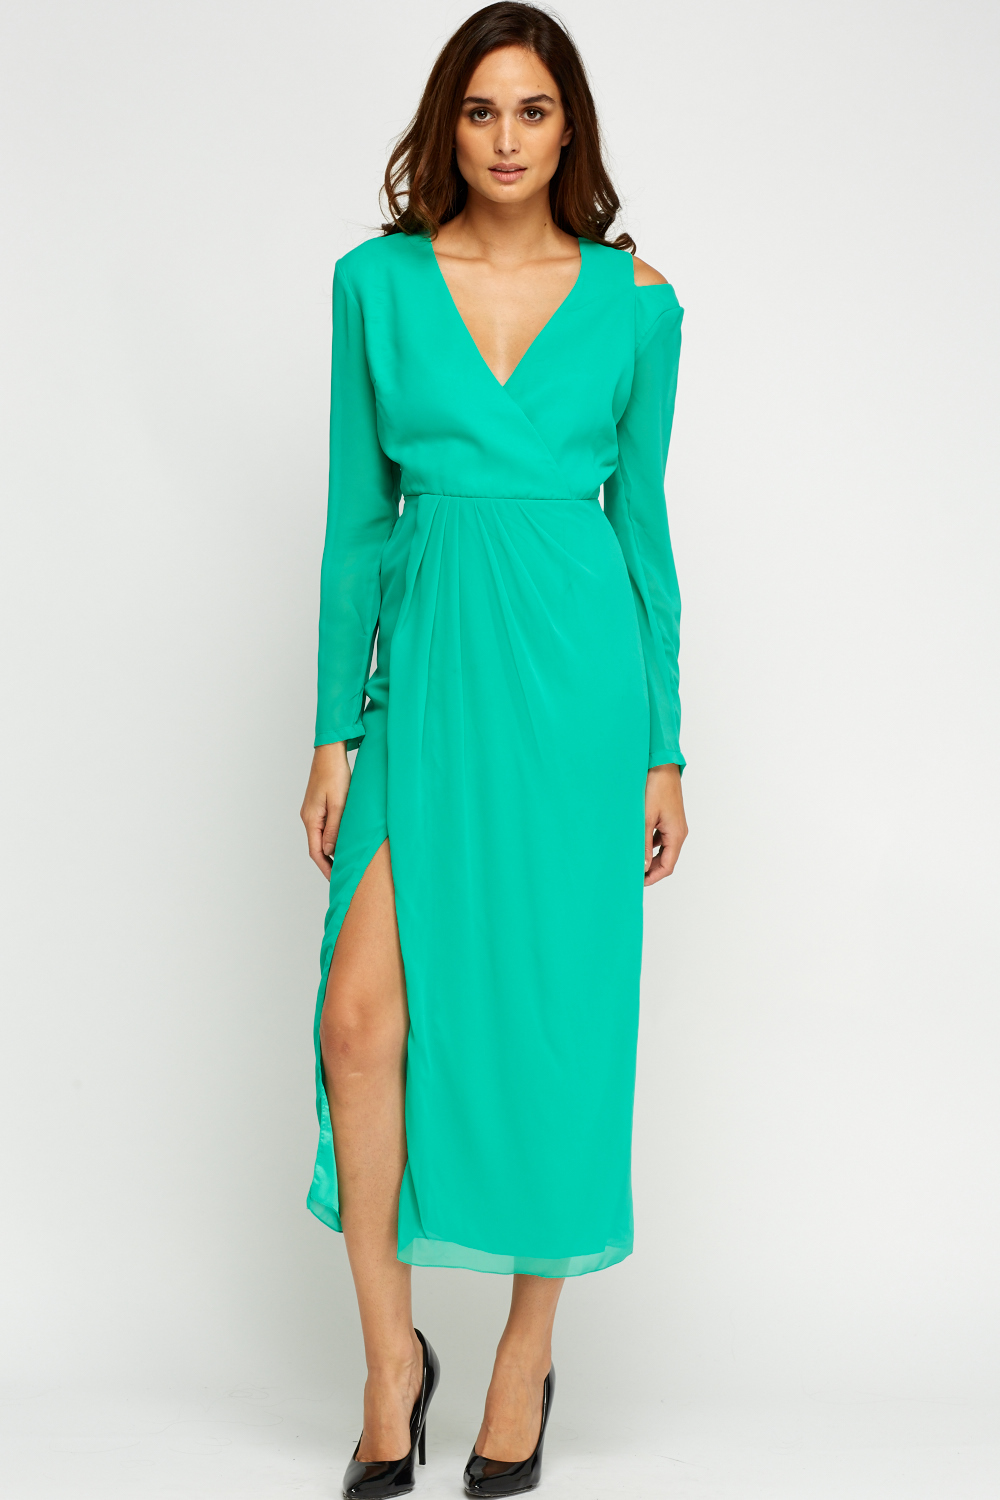 Sheer Wrap Green Slit Front Maxi Dress - Just $7